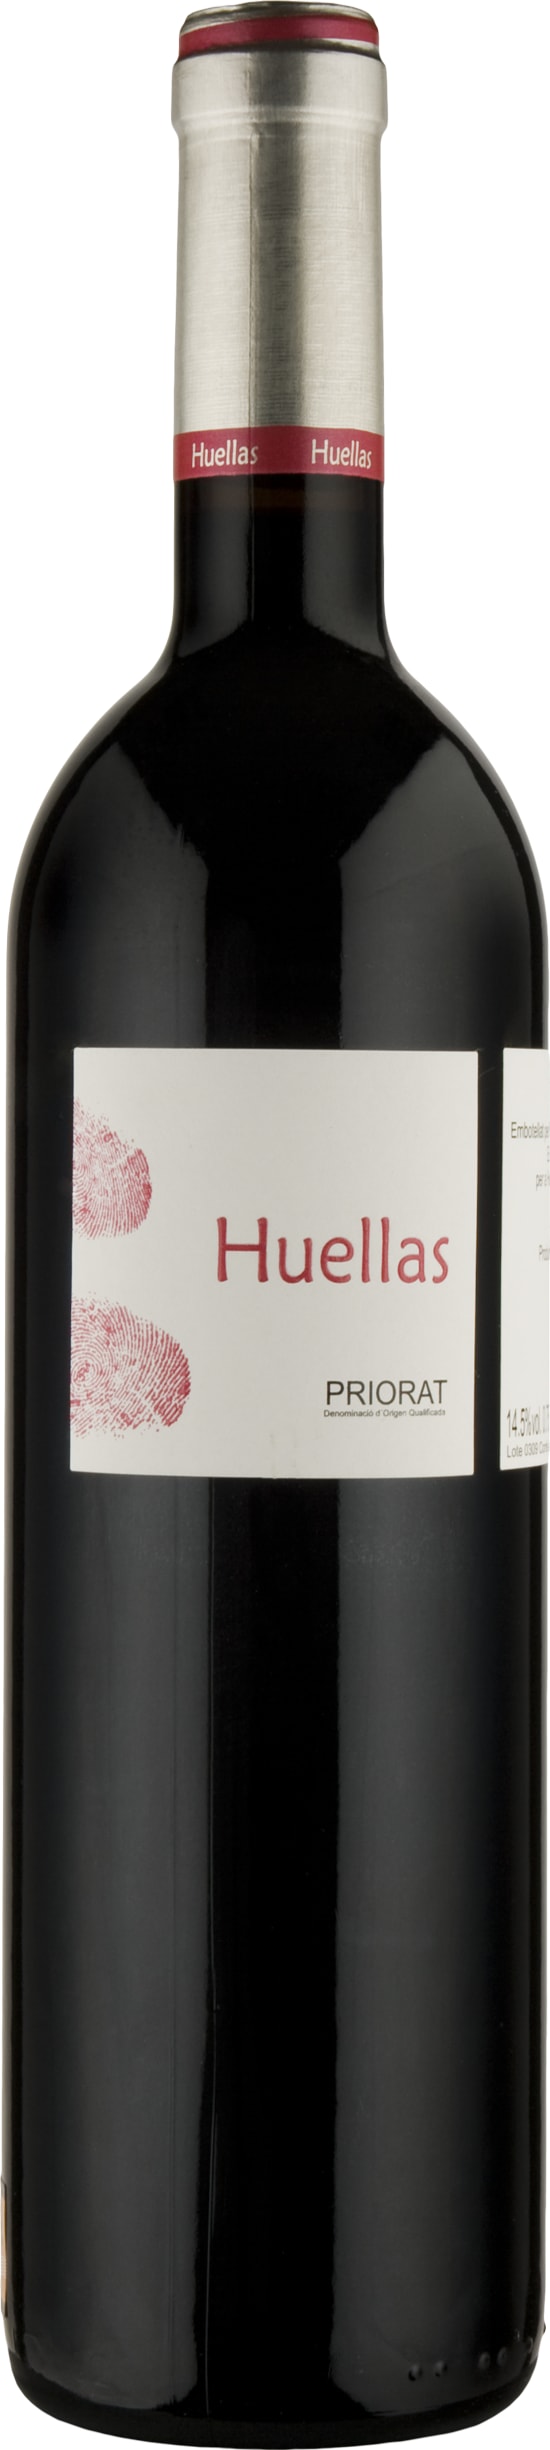 Franck Massard Huellas Priorat 2017 6x75cl - Just Wines 